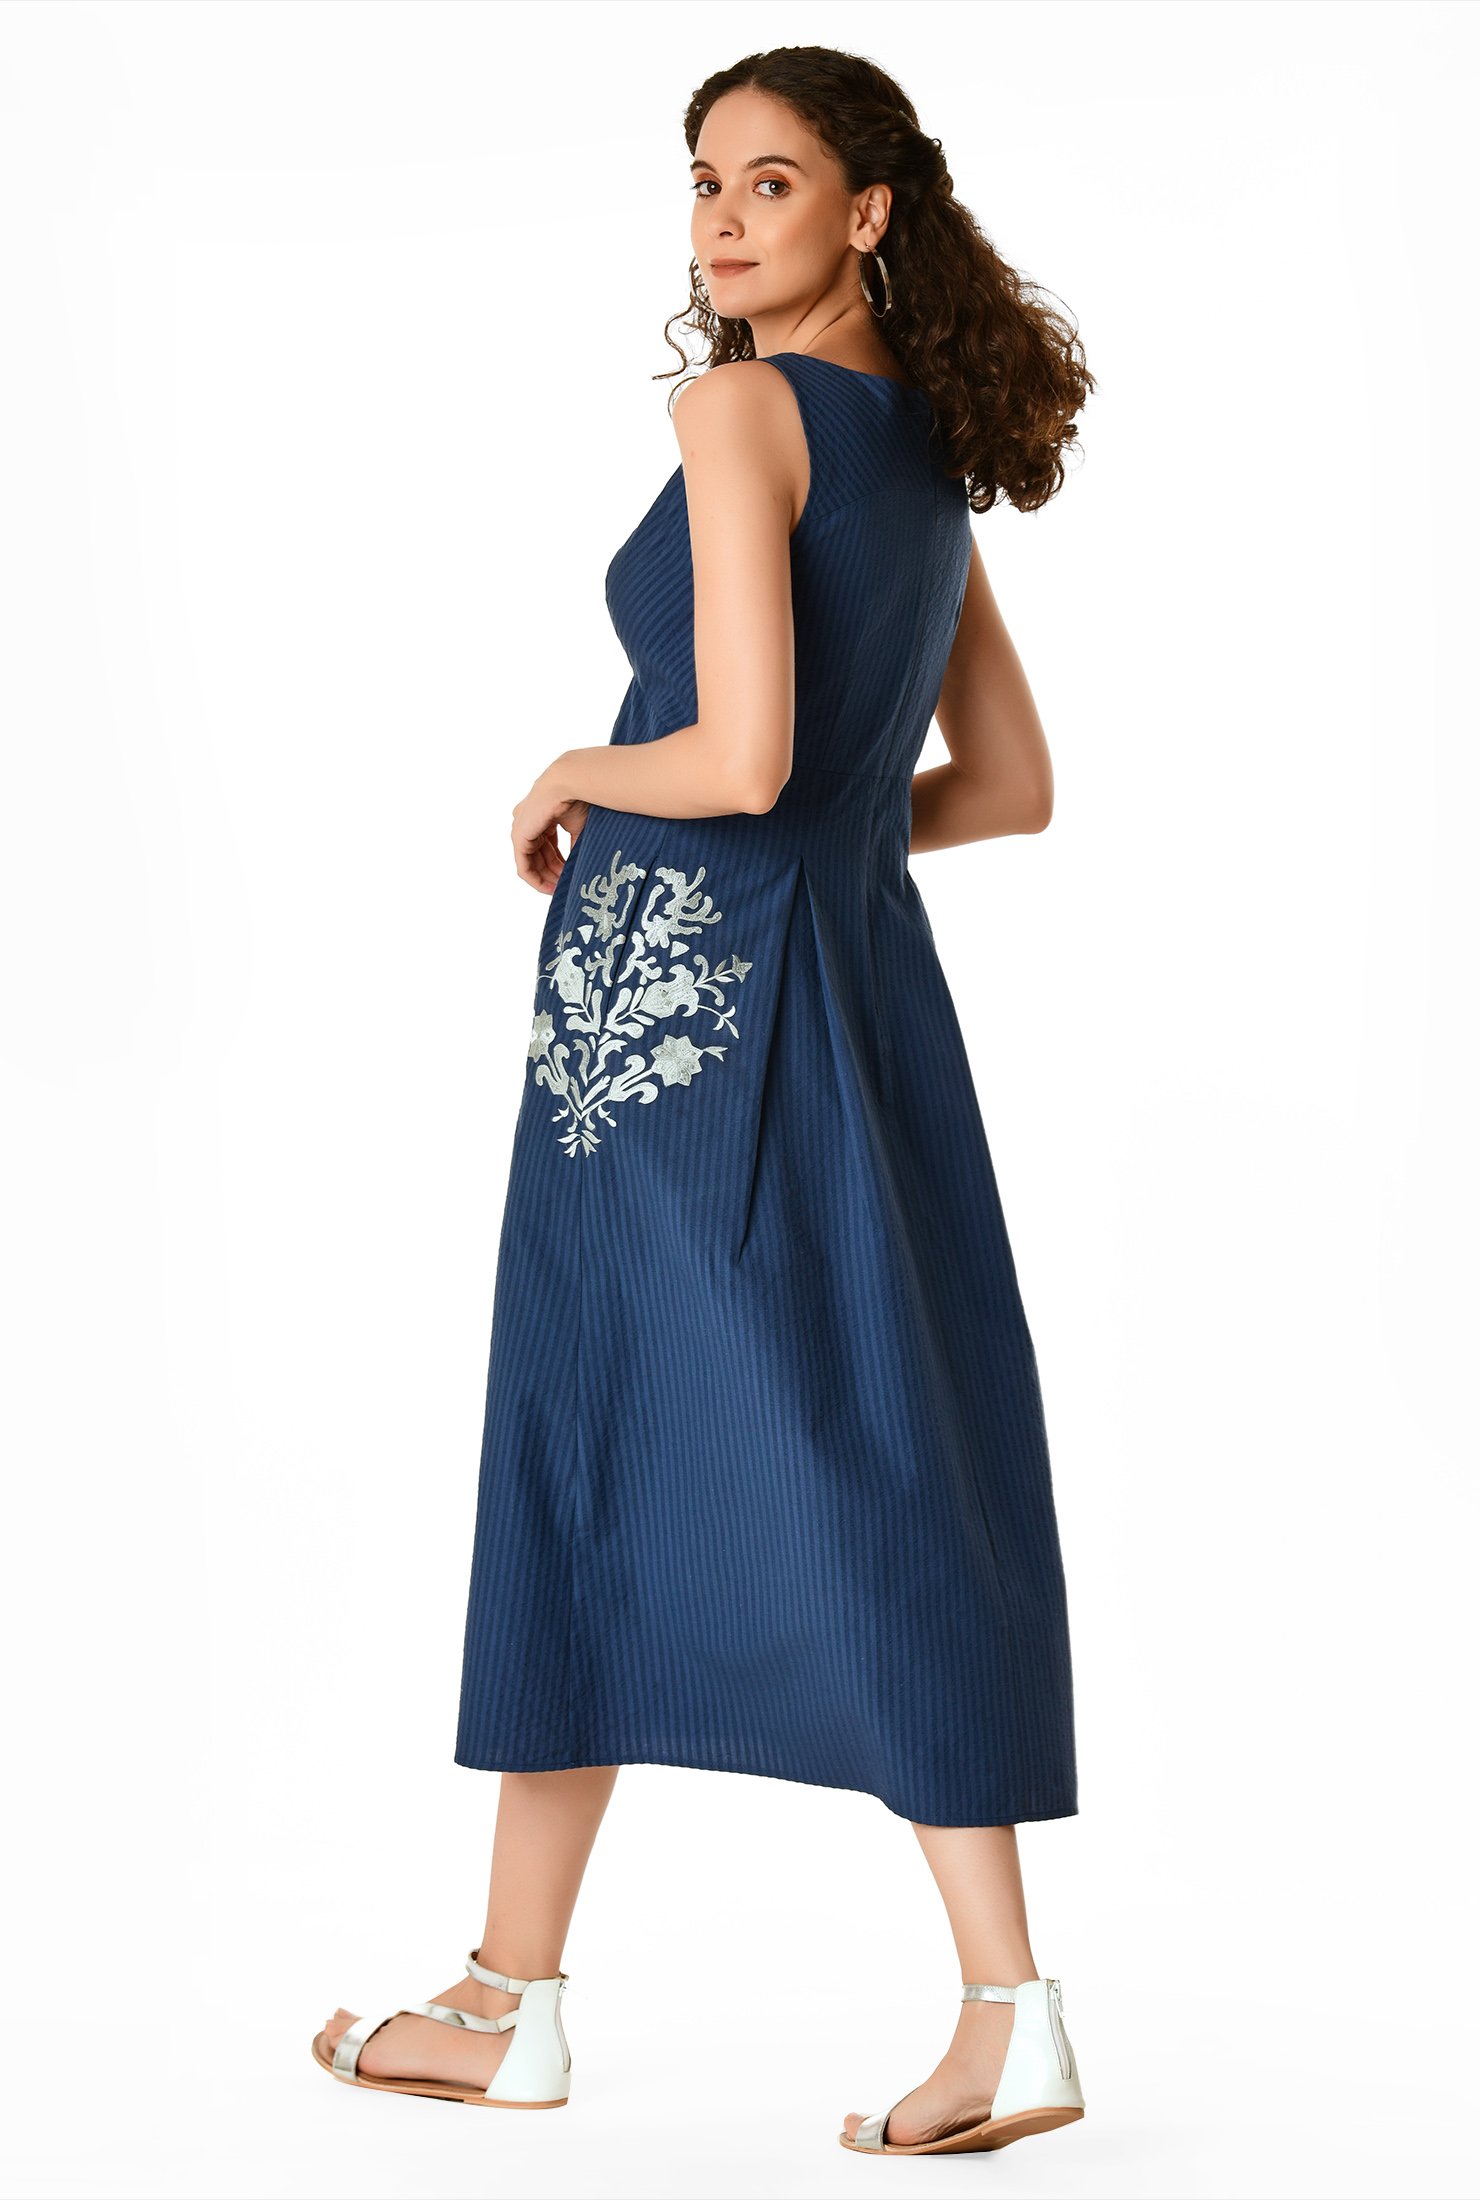 Shop Floral Embroidery Seersucker Stripe Cotton Empire Dress Eshakti